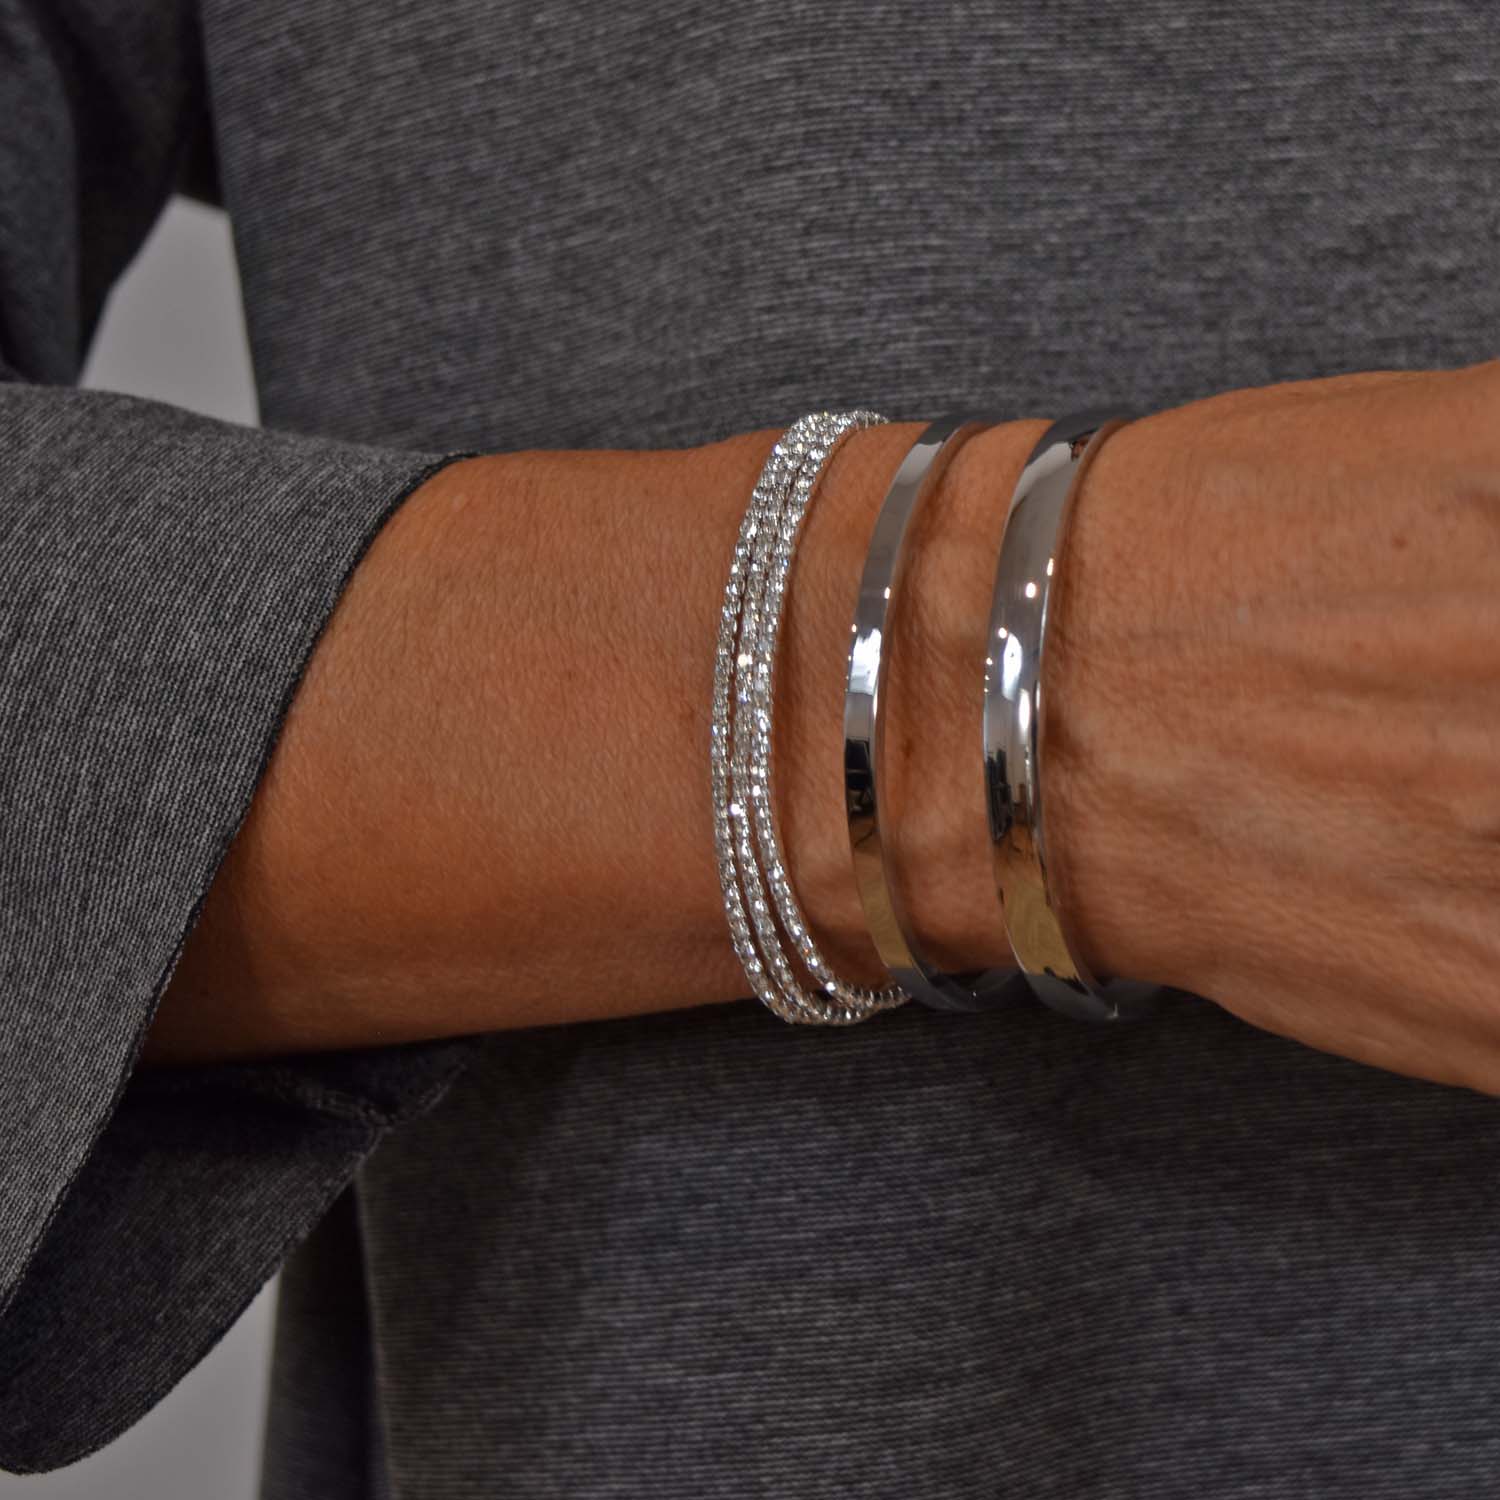 Thin silver bracelet
